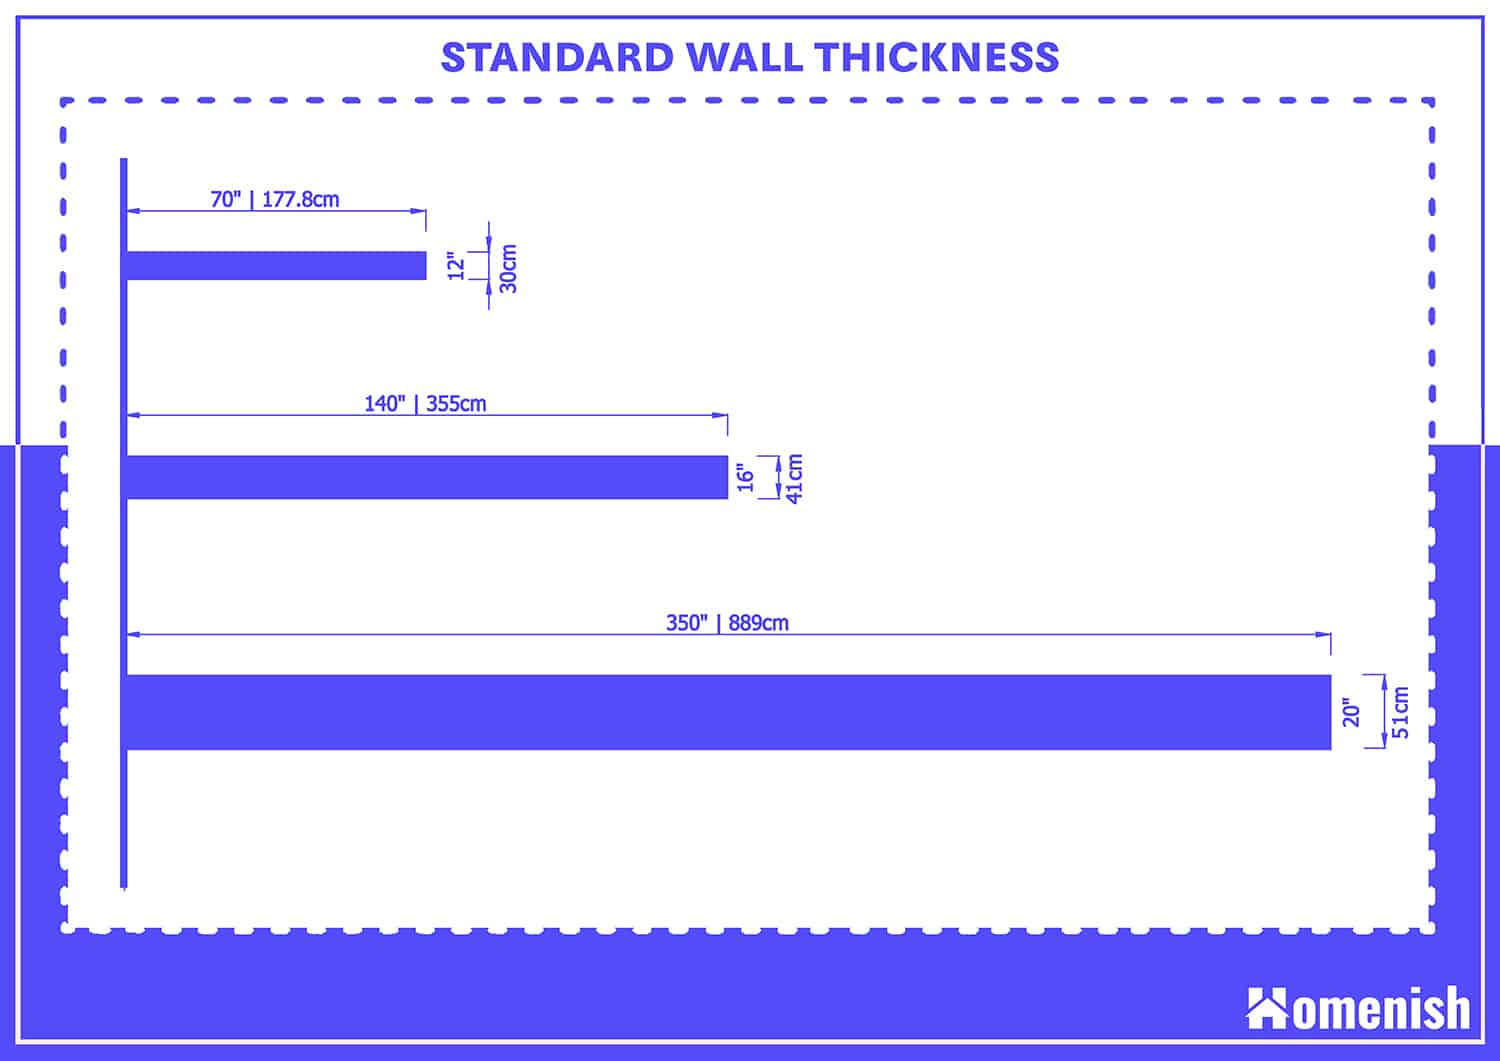 Standard Wall Thickness